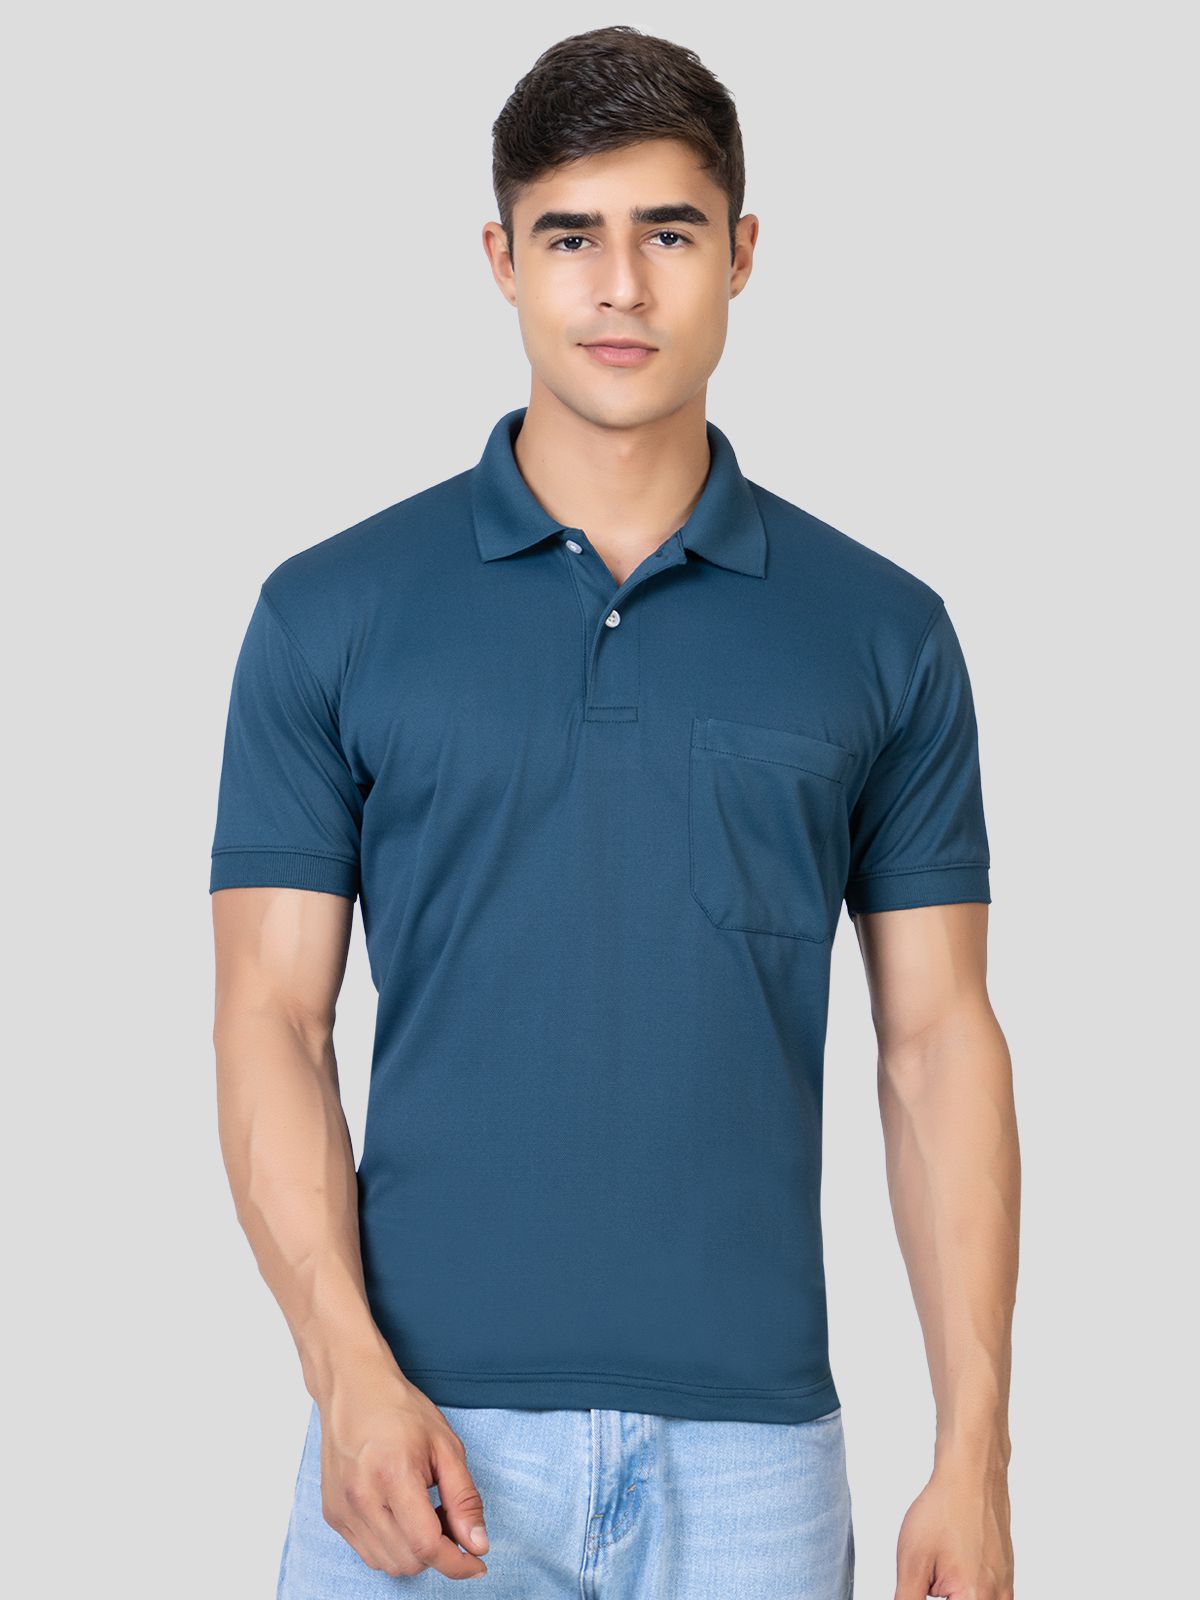     			YHA - Teal Blue Cotton Blend Regular Fit Men's Polo T Shirt ( Pack of 1 )